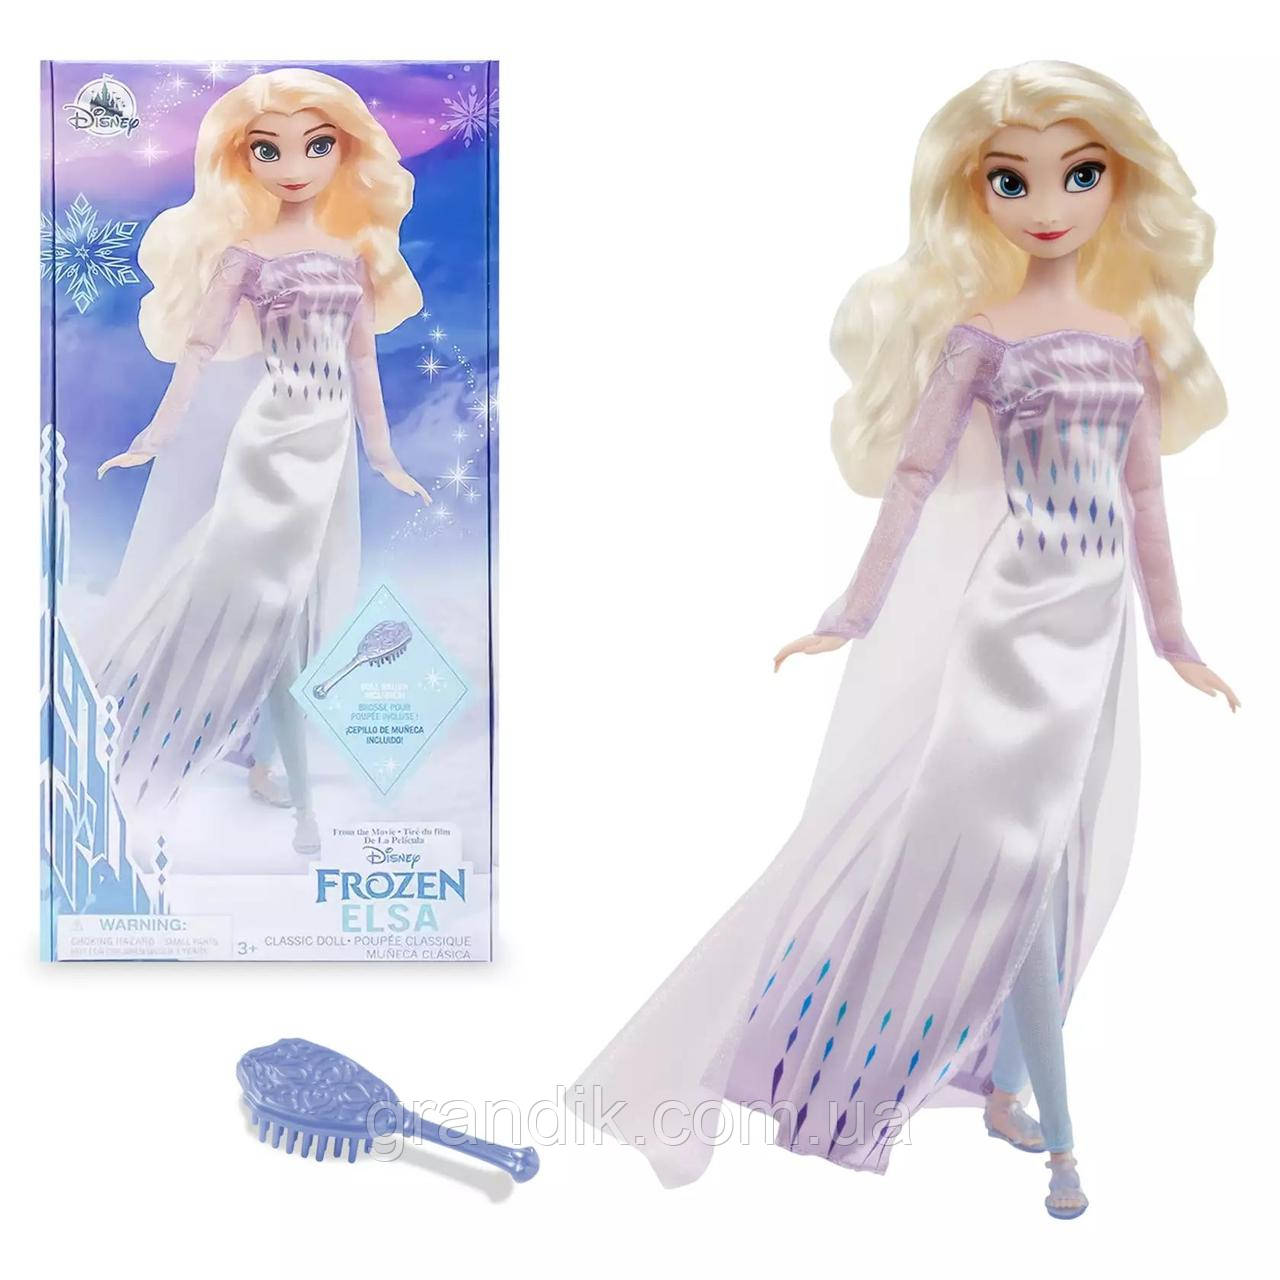 Класична лялька Ельза, принцеса Дісней, оригінал, Elsa Classic Doll – Frozen 2